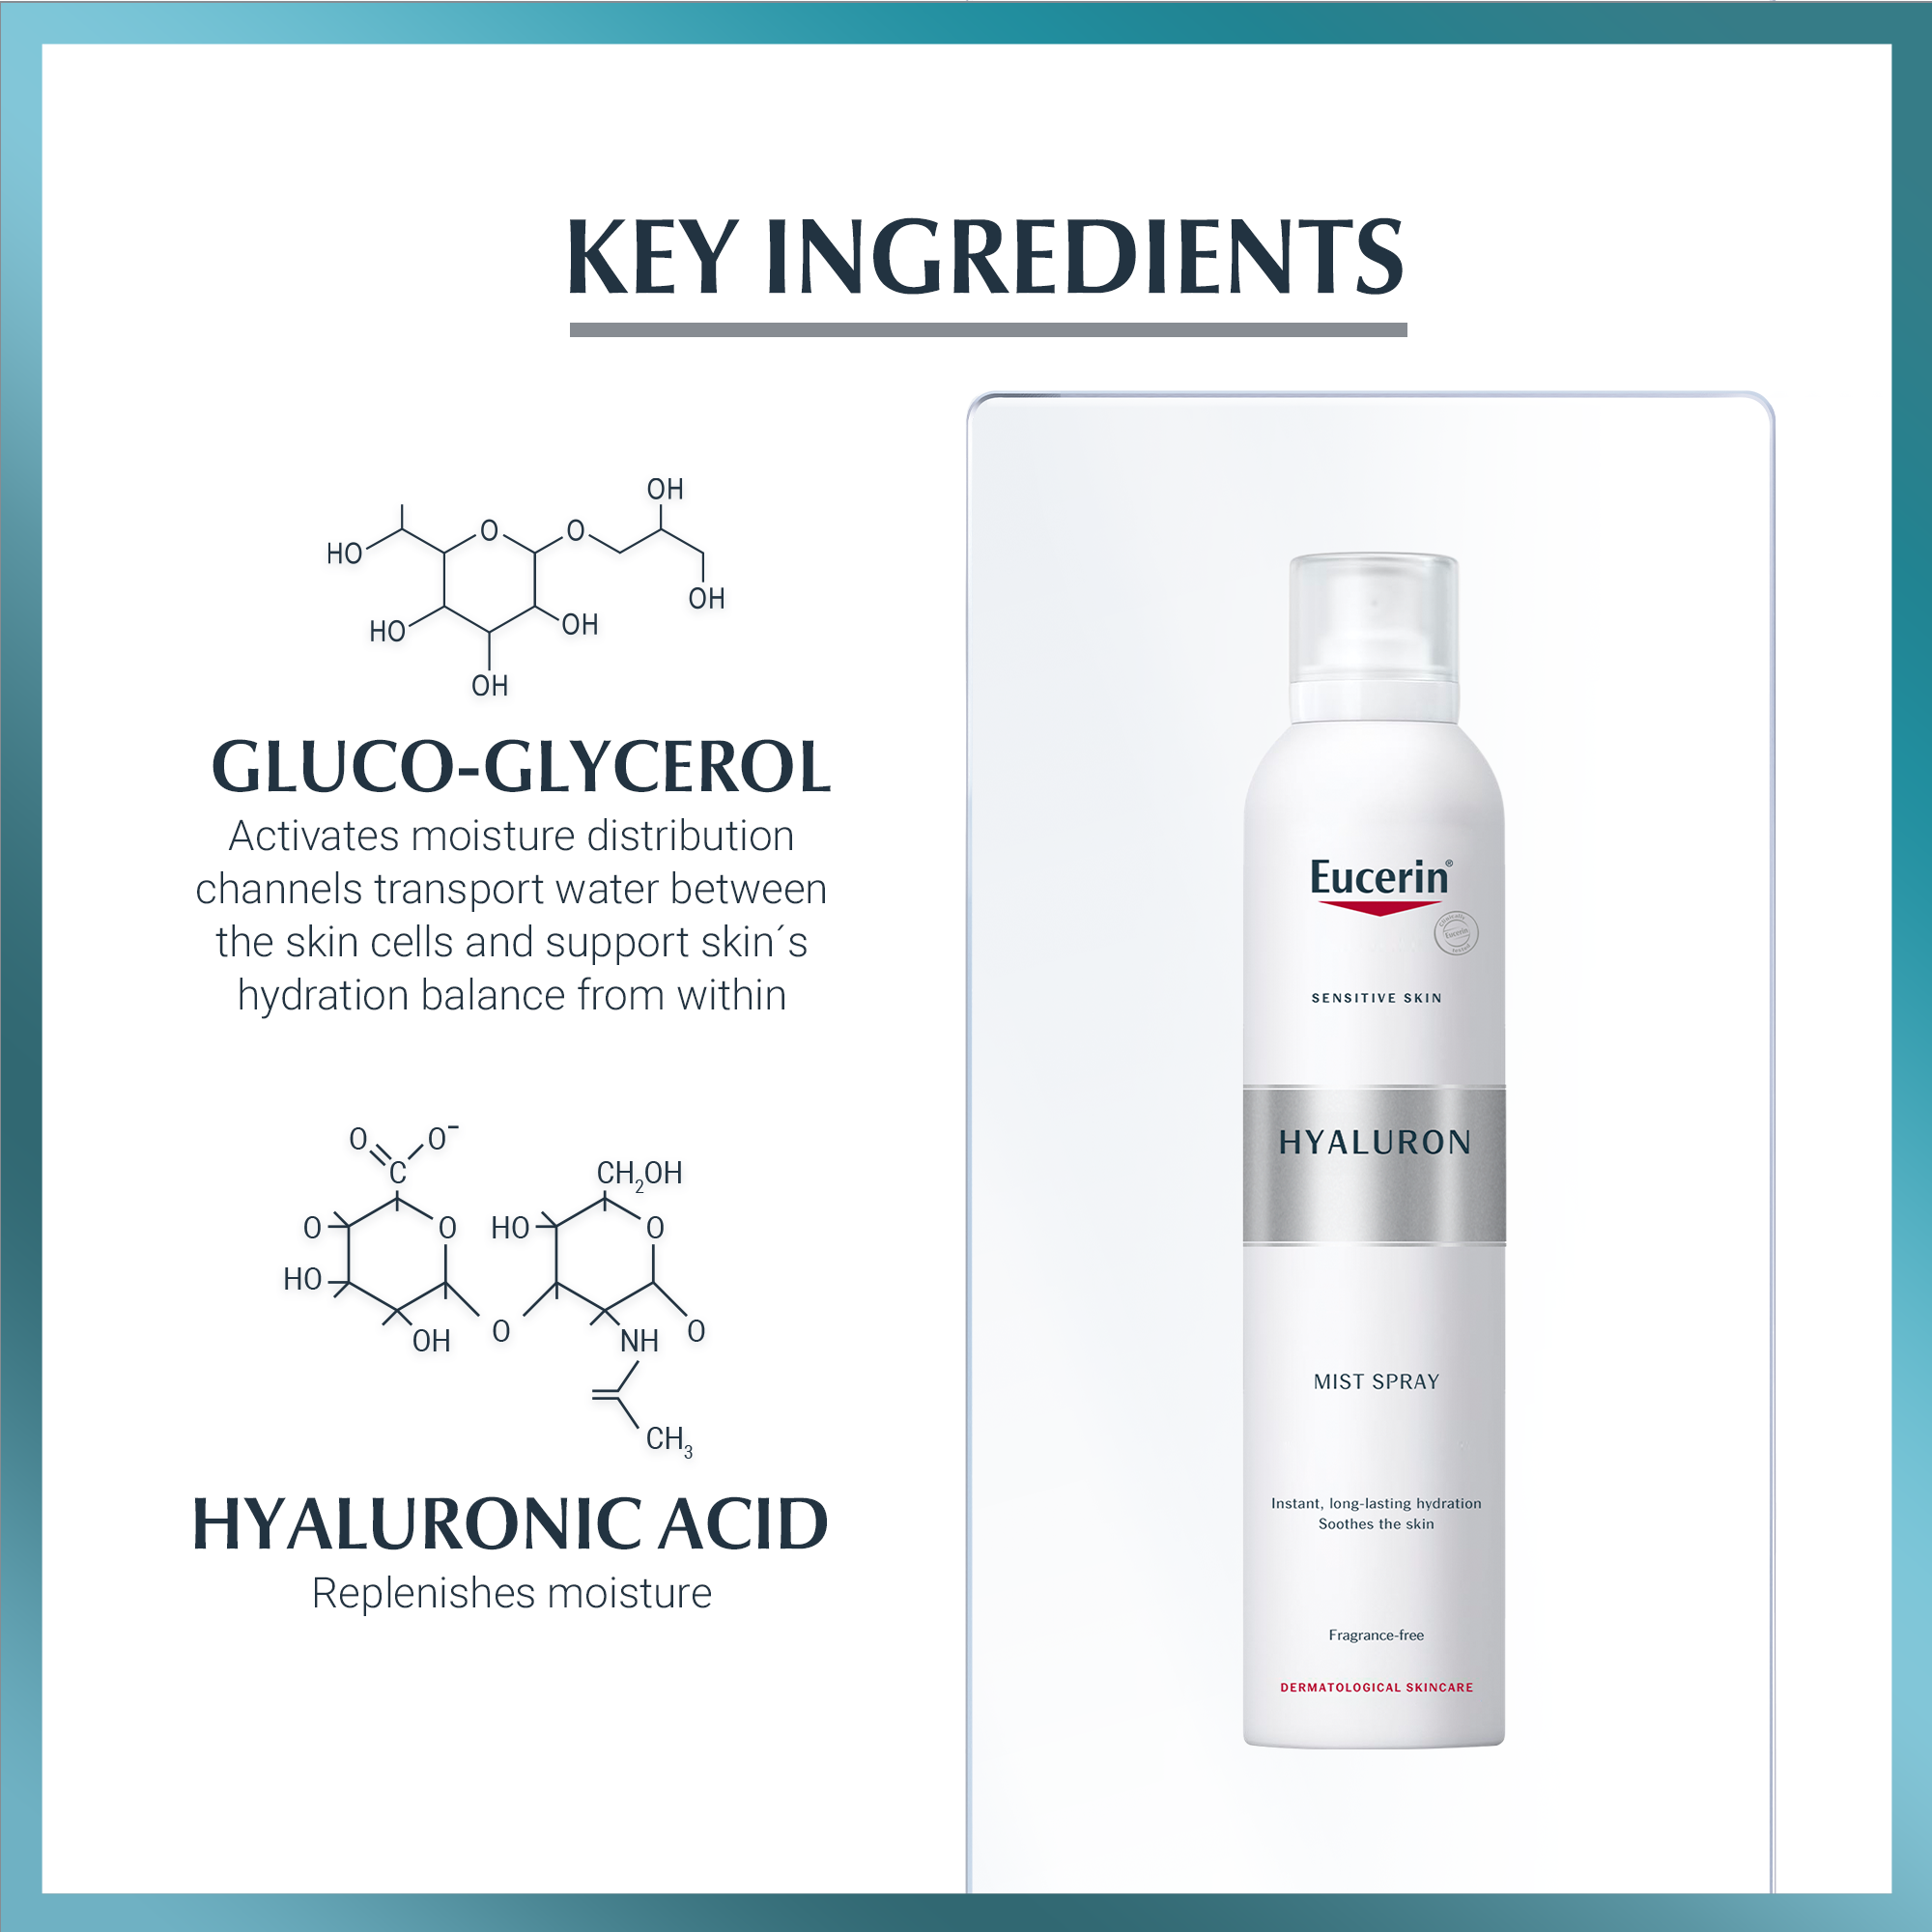 Key Benefits Hyaluron Mist Spray